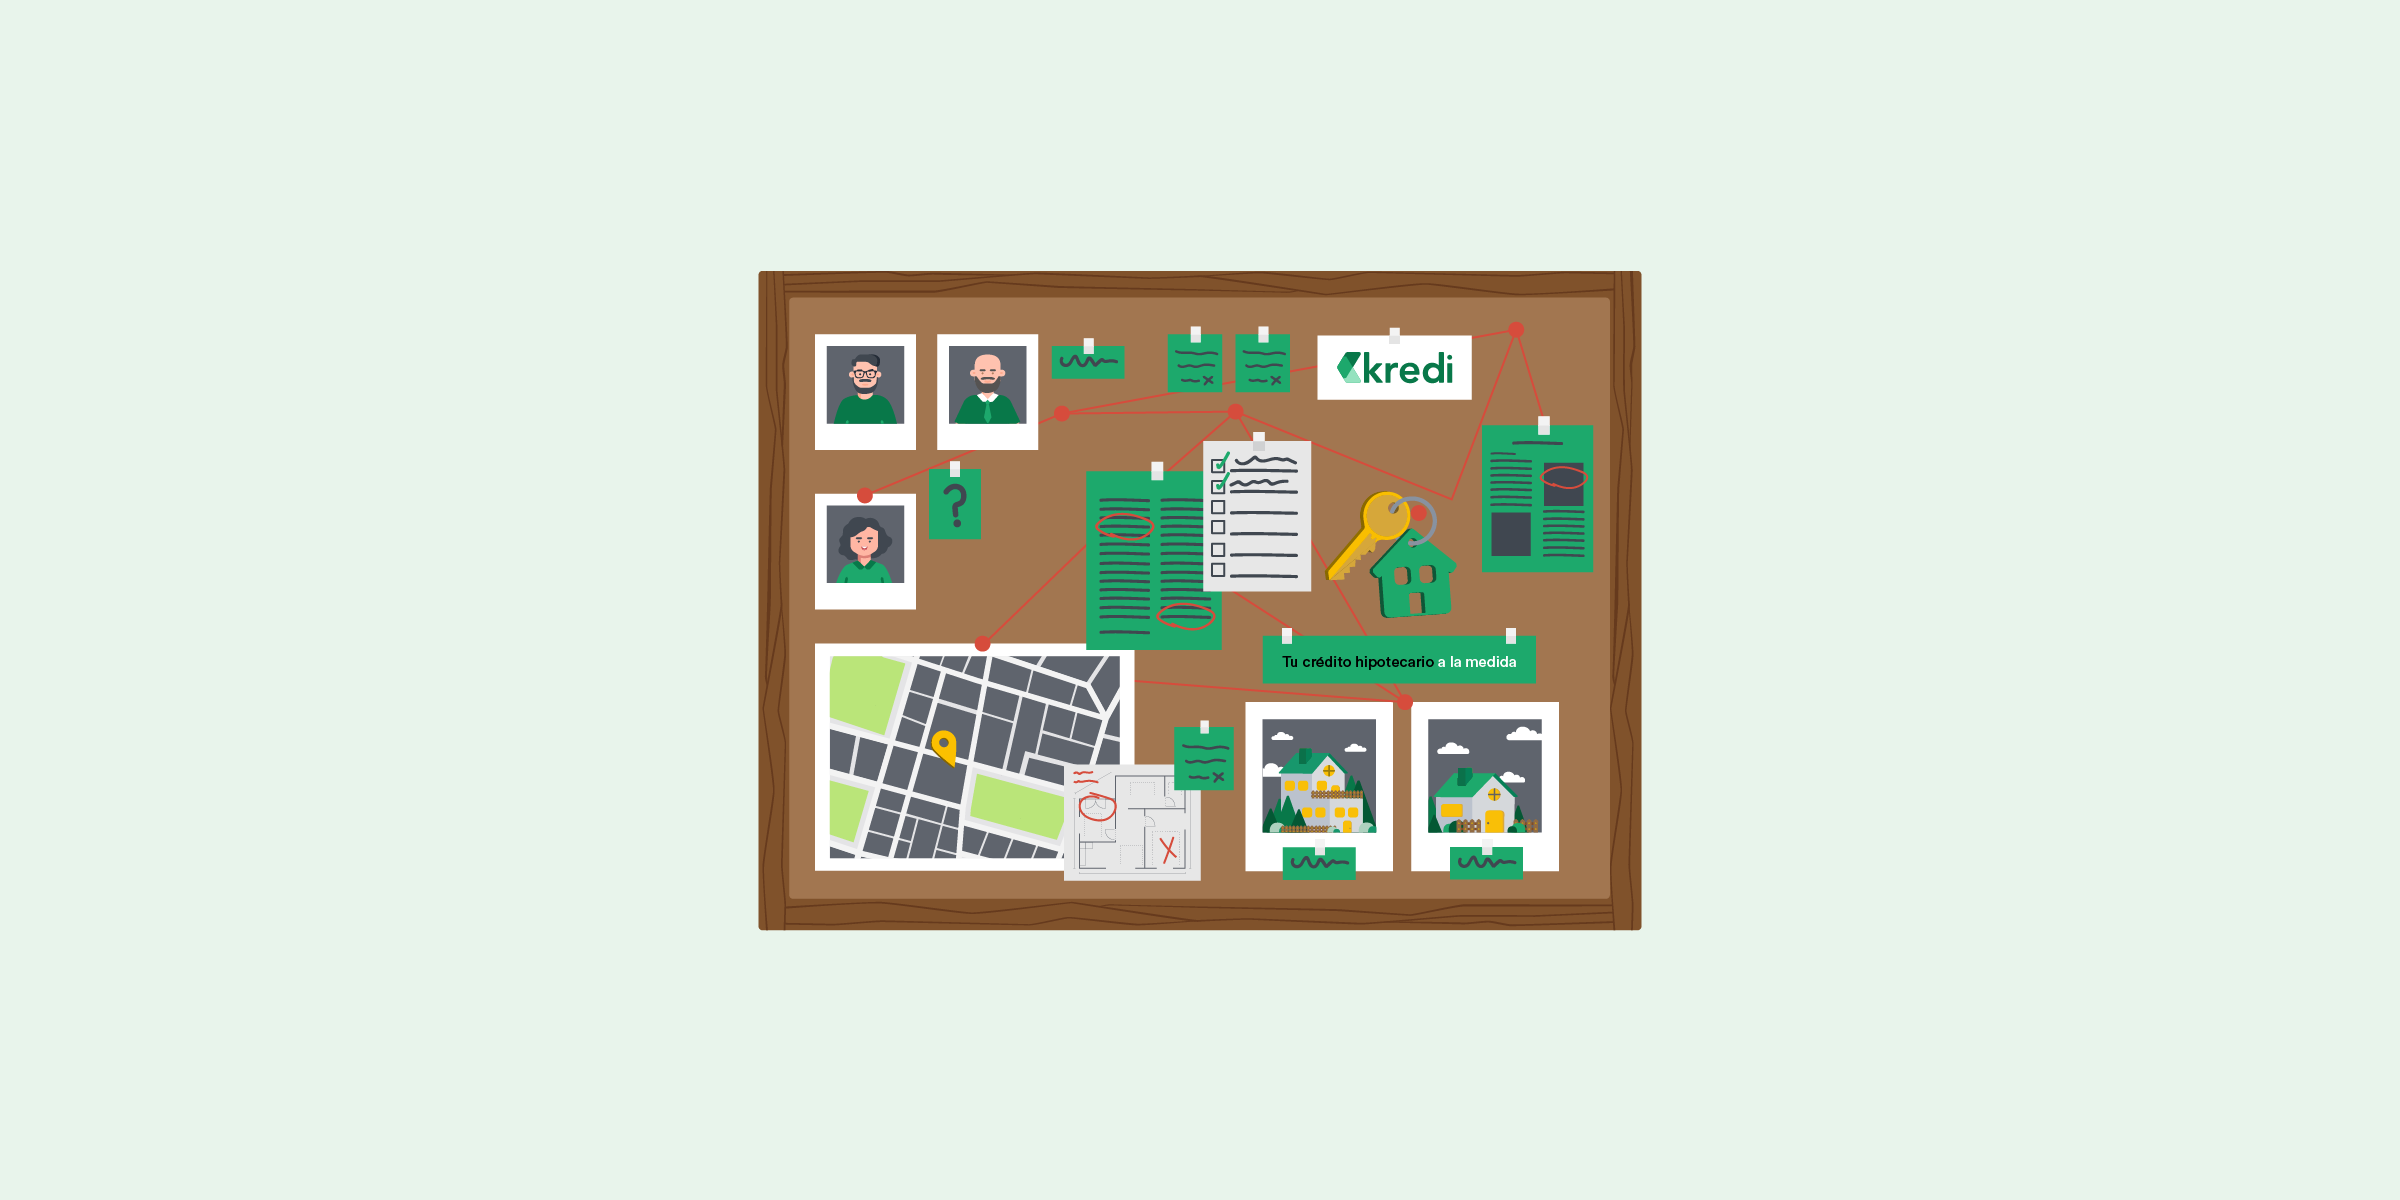 Ilustración con fondo verde claro, pizarrón de corcho con elementos como fotografías de casas, mapas, logo de Kredi.